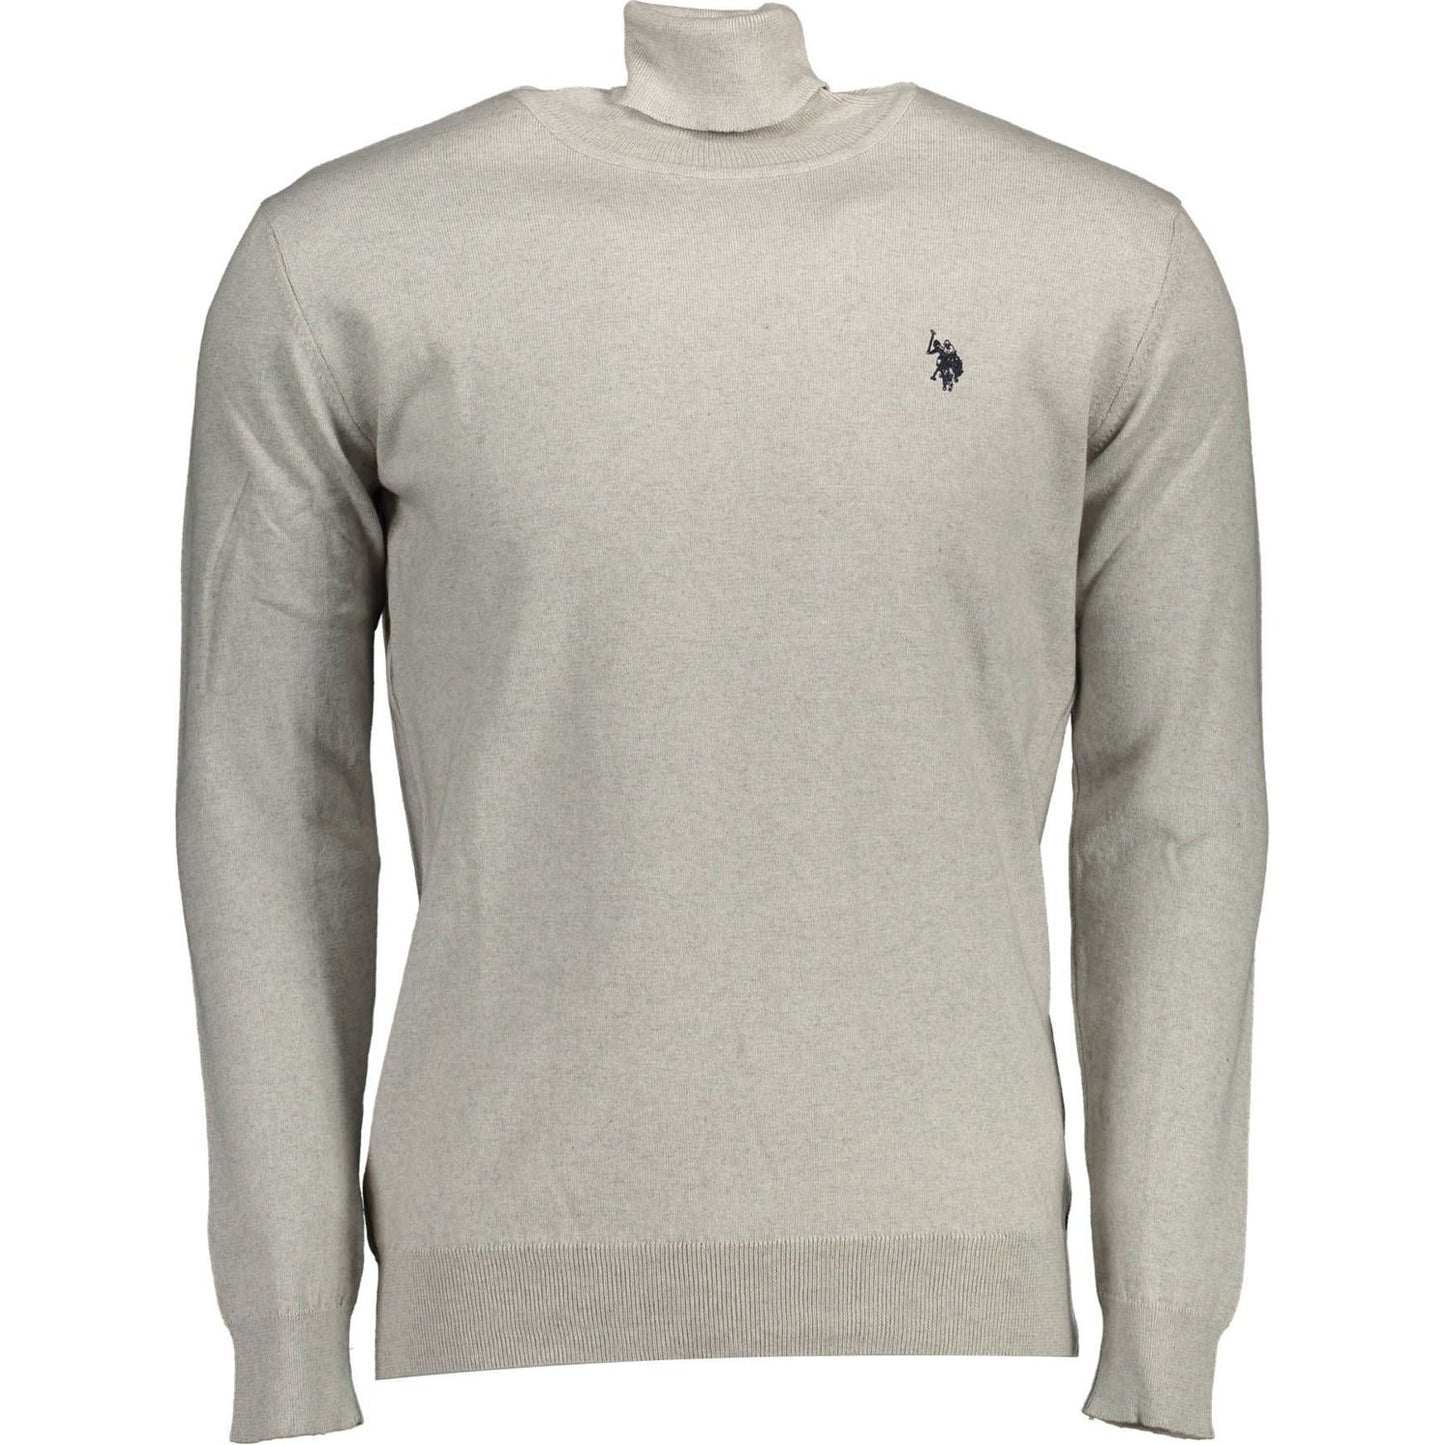 U.S. POLO ASSN. Elegant Gray Turtleneck Cashmere Blend Sweater elegant-gray-turtleneck-cashmere-blend-sweater